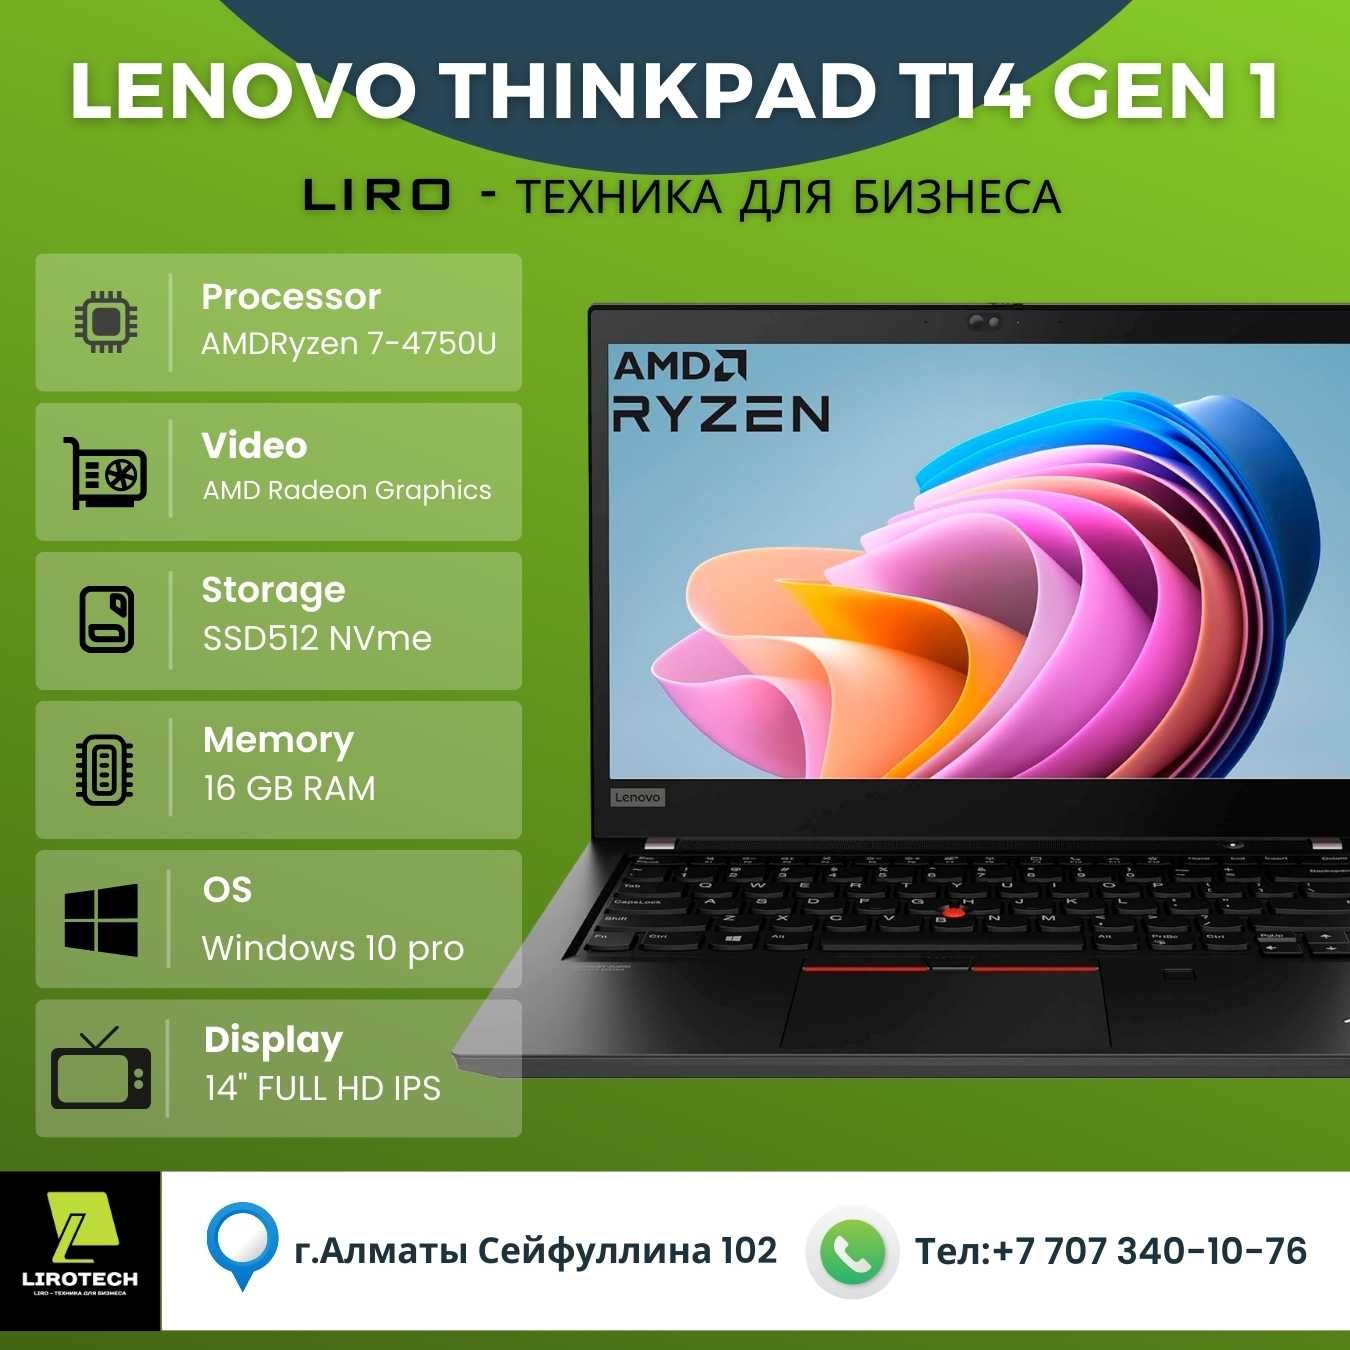 Ноутбук Lenovo ThinkPad T14 GEN 1. AMDRyzen 7-4750U - 1.7/4.1 Ghz 8/16